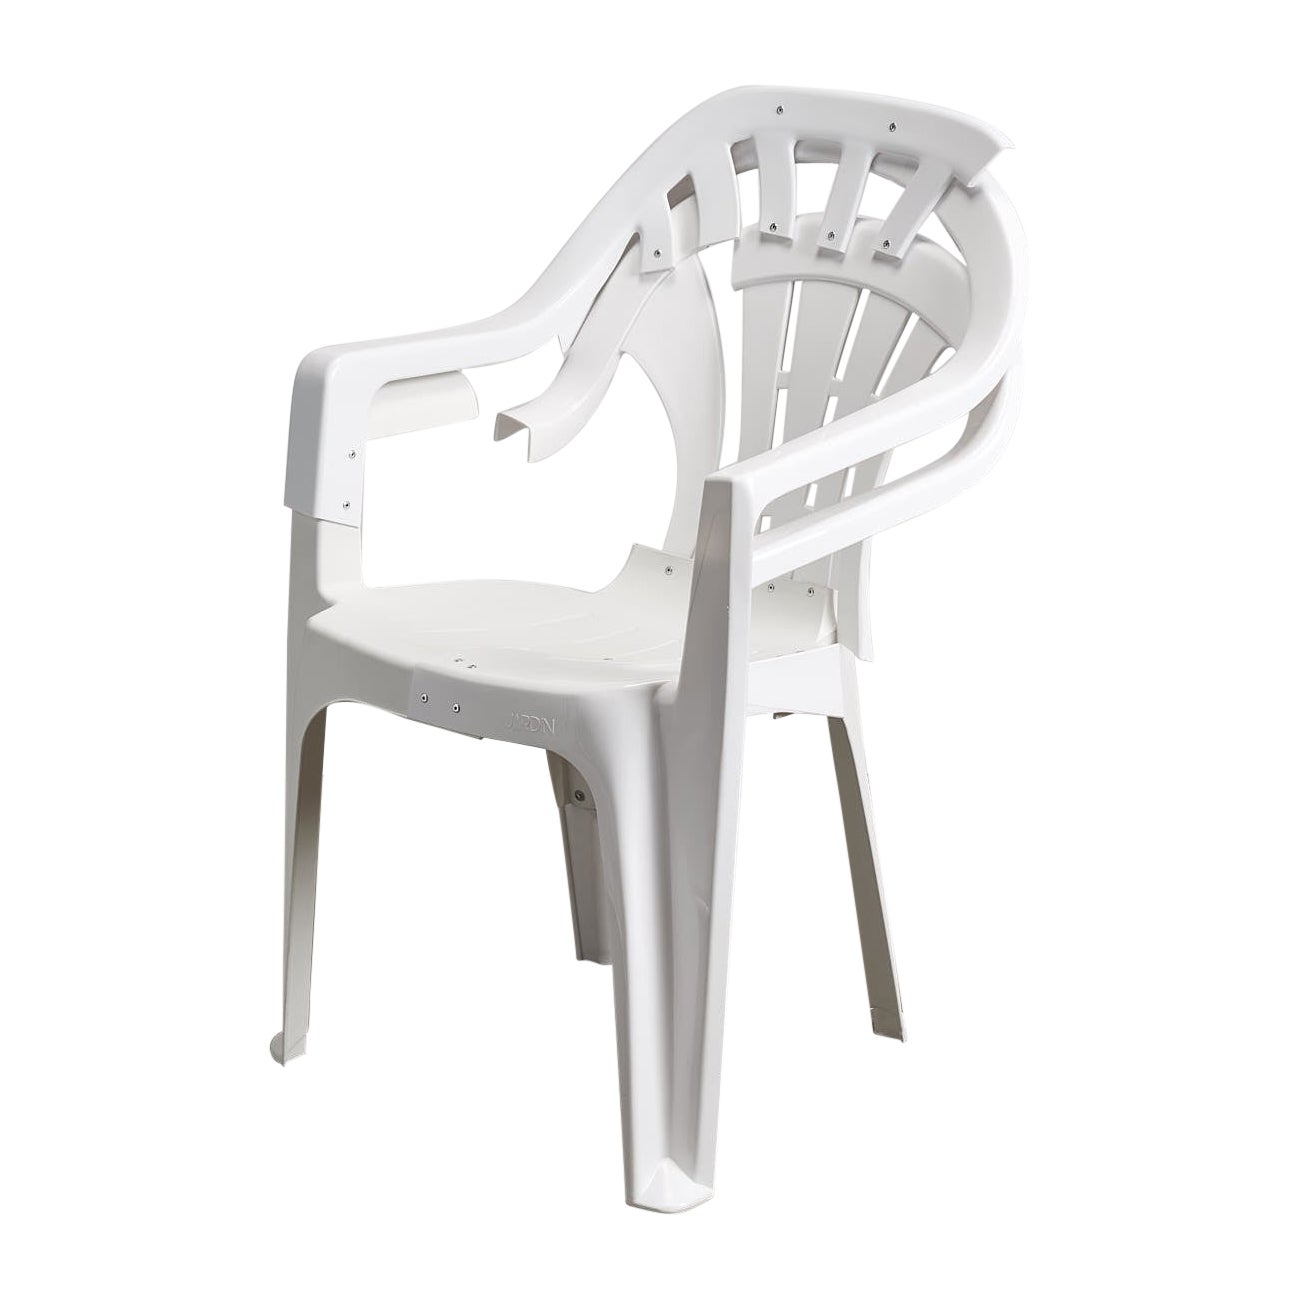 Copytopia n°19, chaise de jardin en plastique blanc, Pierre Castignola